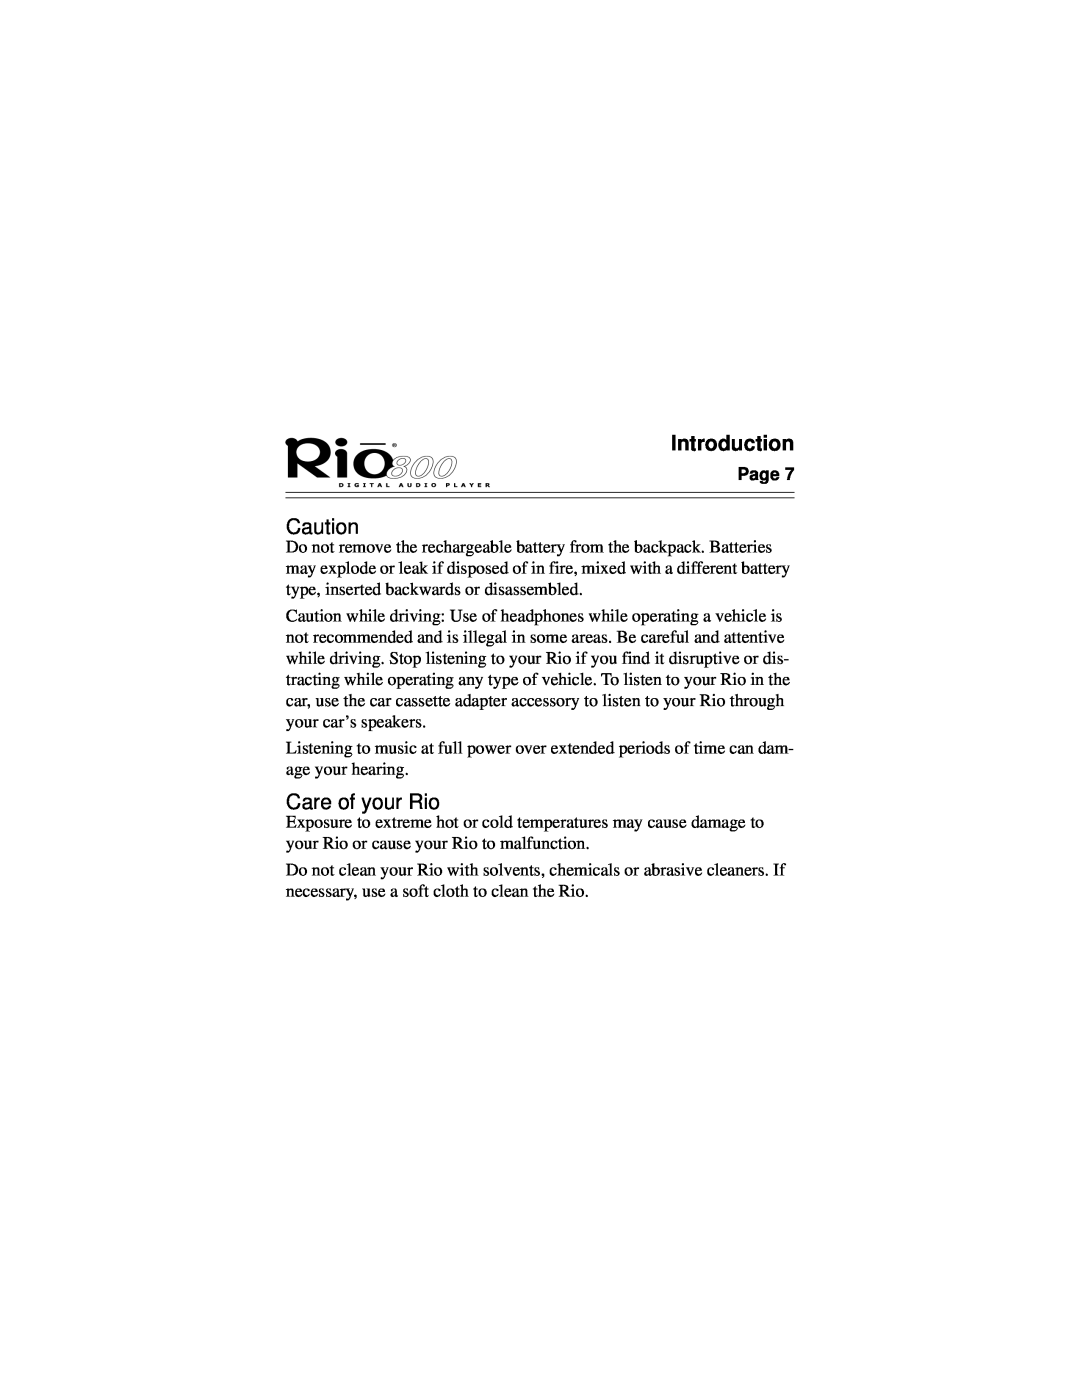 Rio Audio Rio 800 manual Care of your Rio, Introduction 